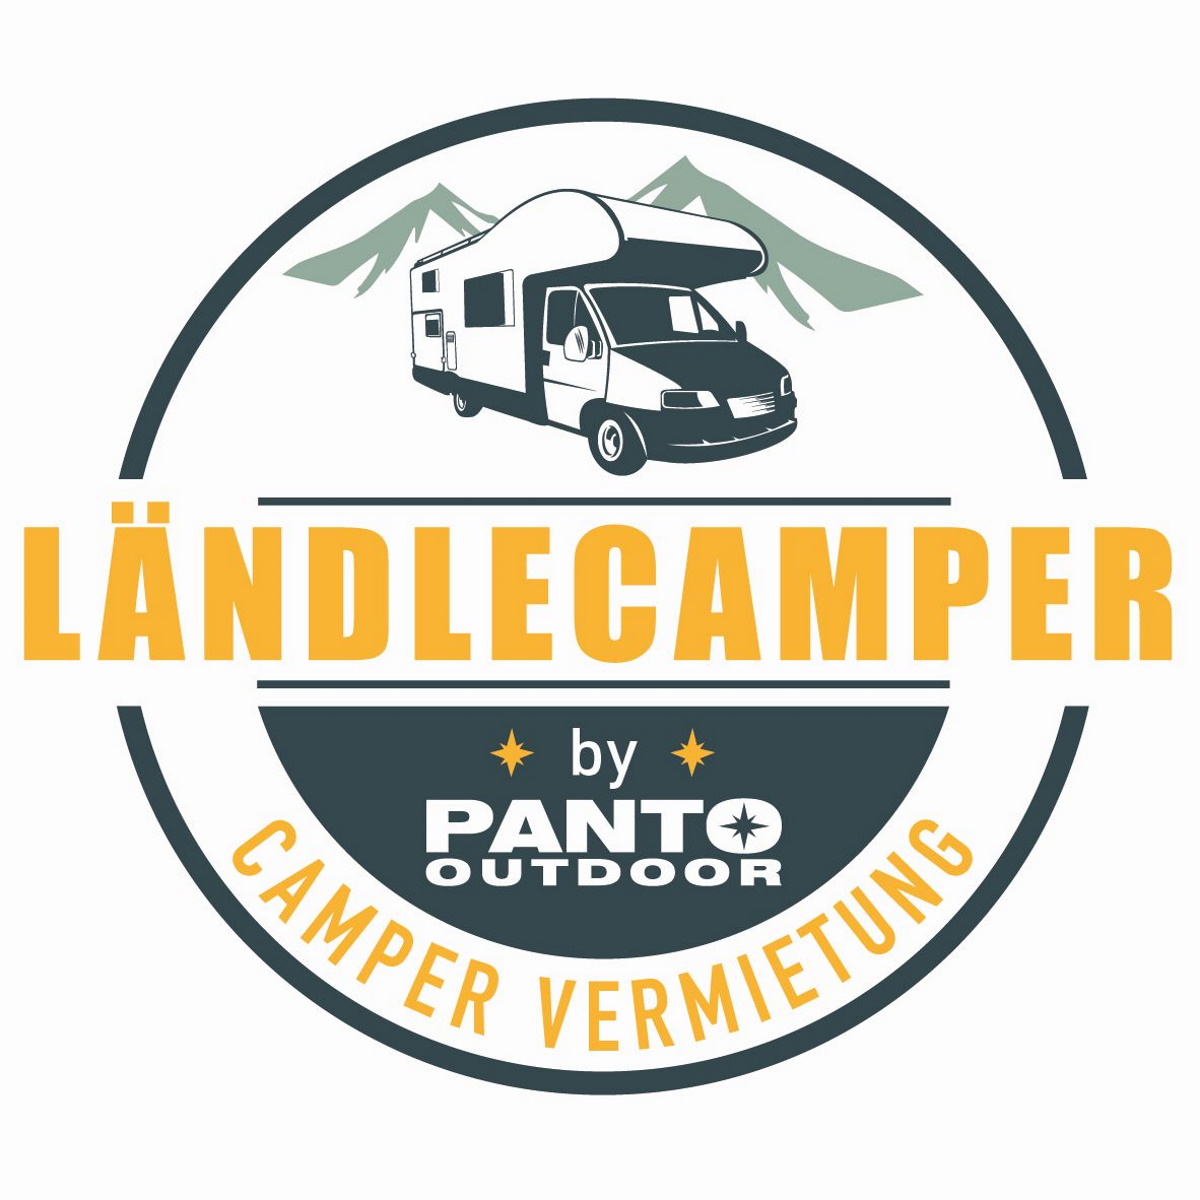 Panto laendlecamper logo farbig12241 1200